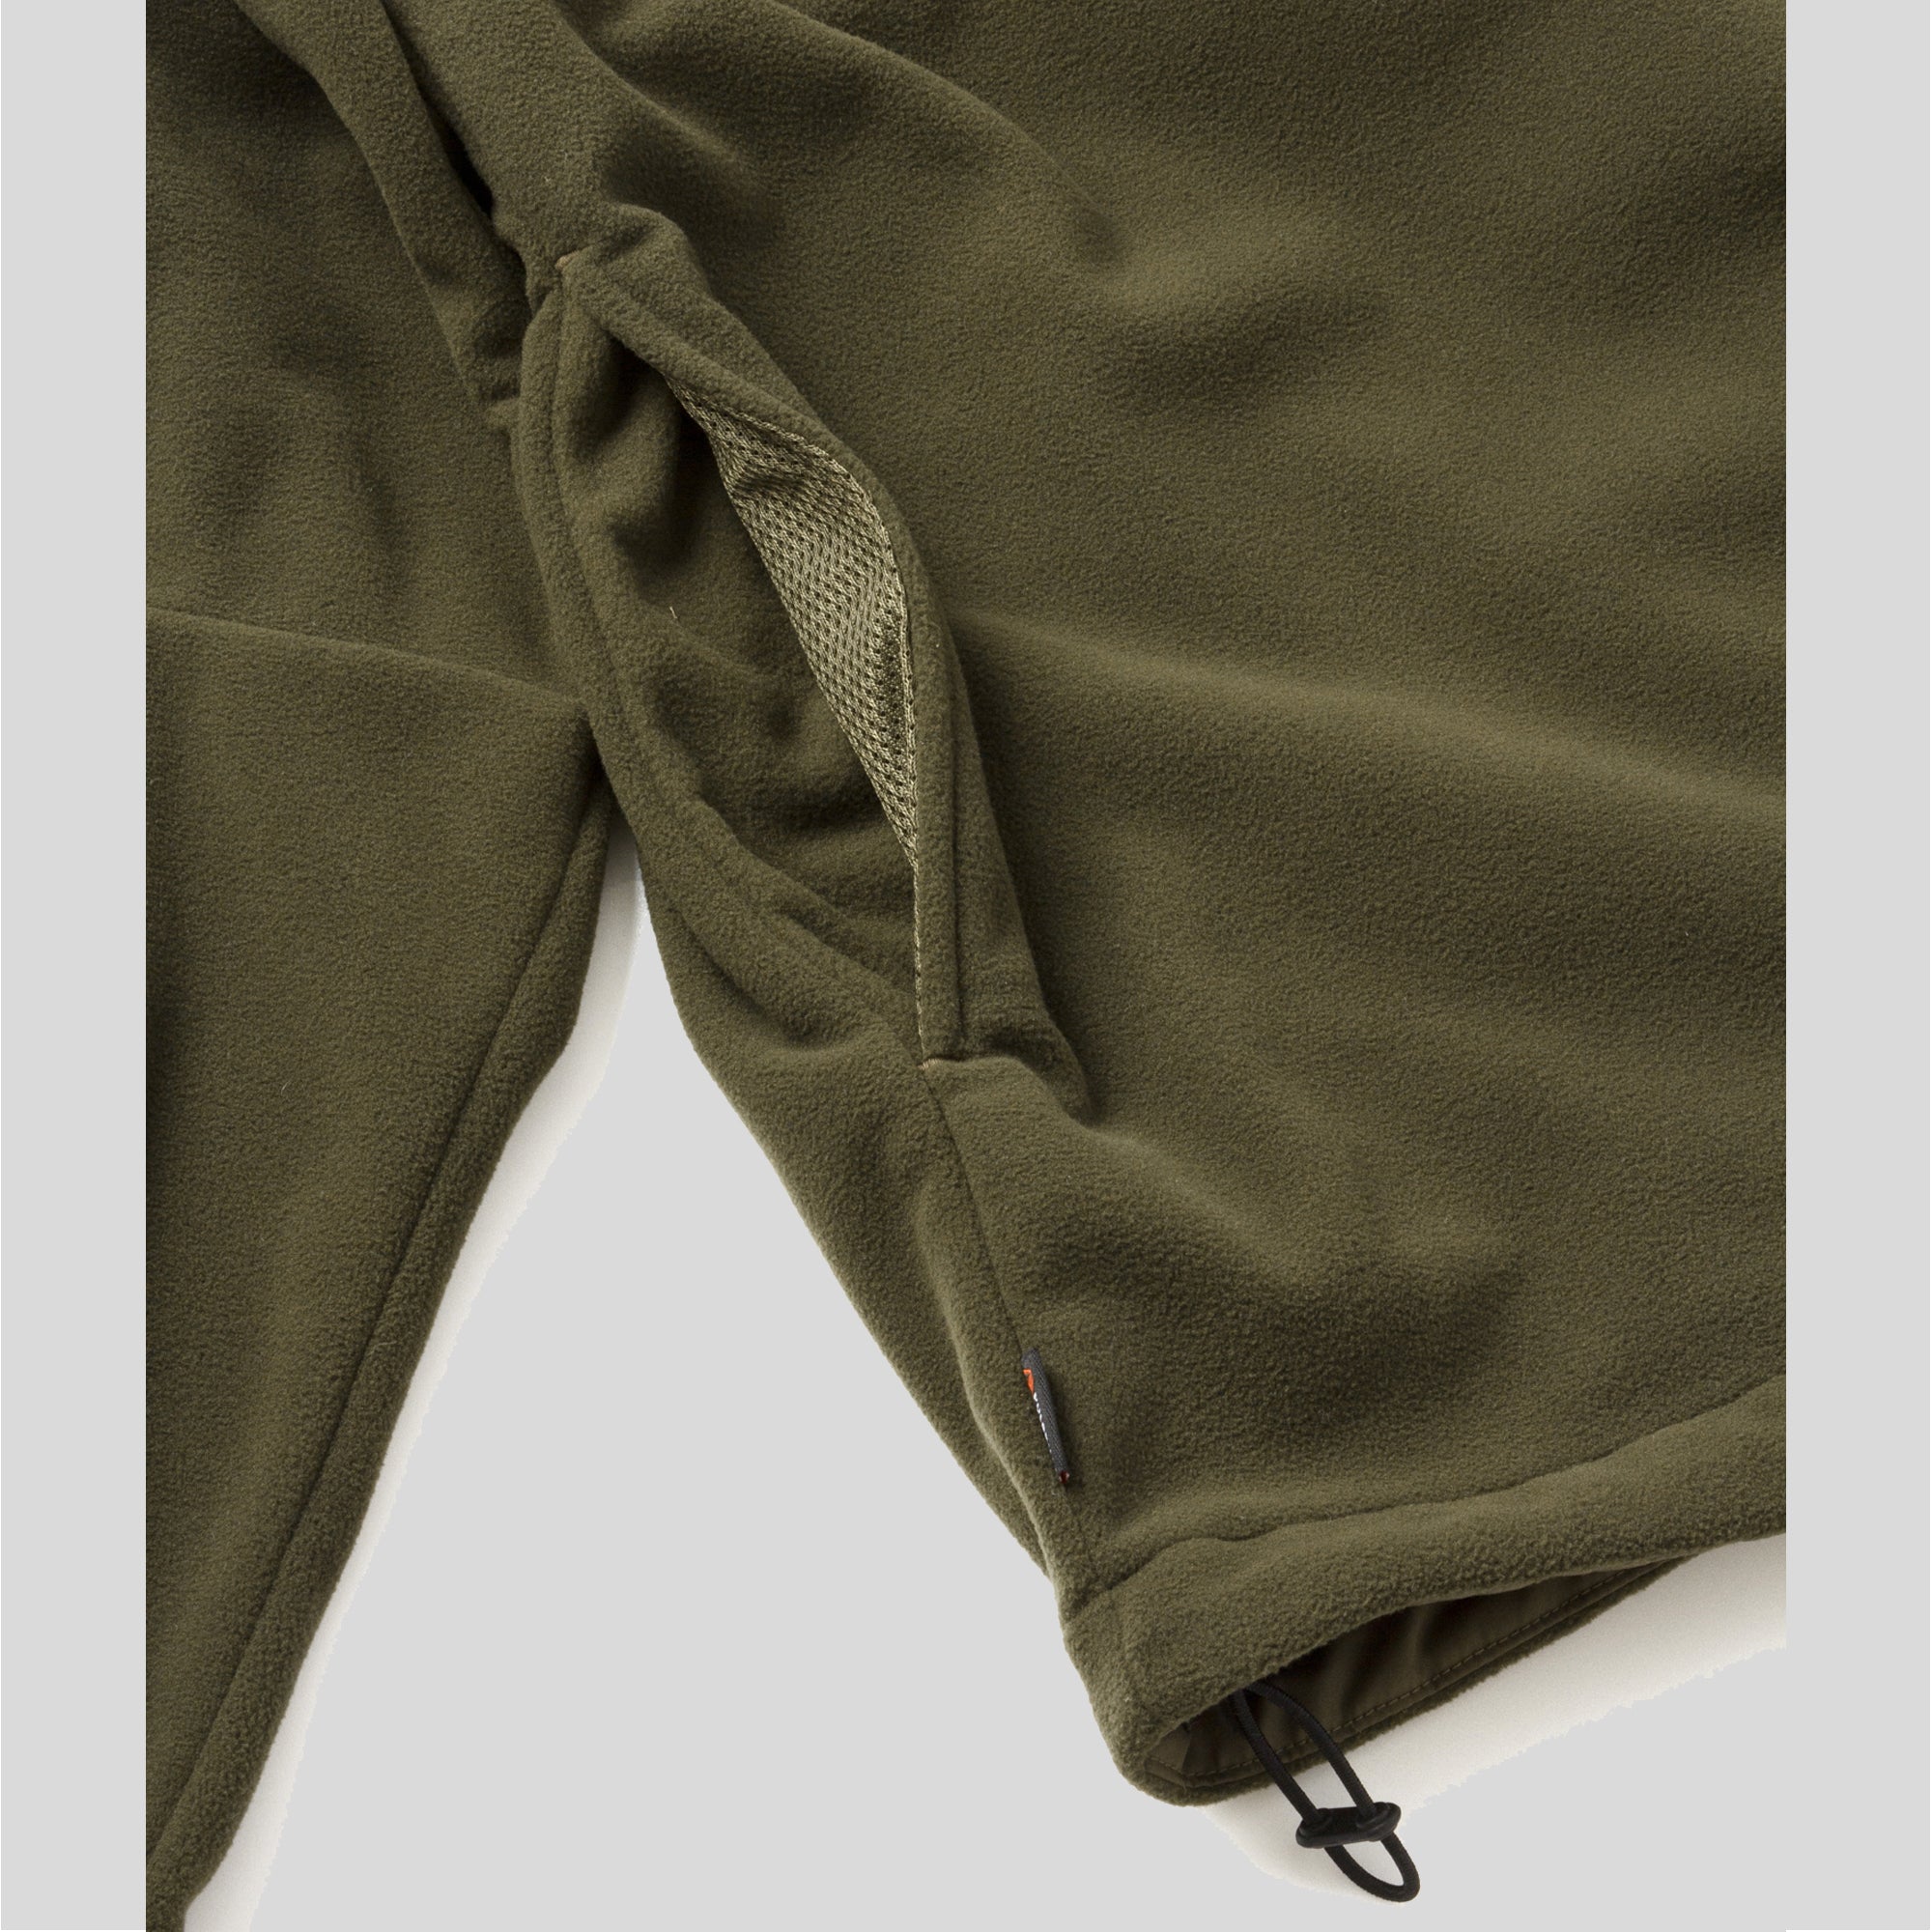 POLARTEC® Wind Pro Fleece Jacket[ES23-01]